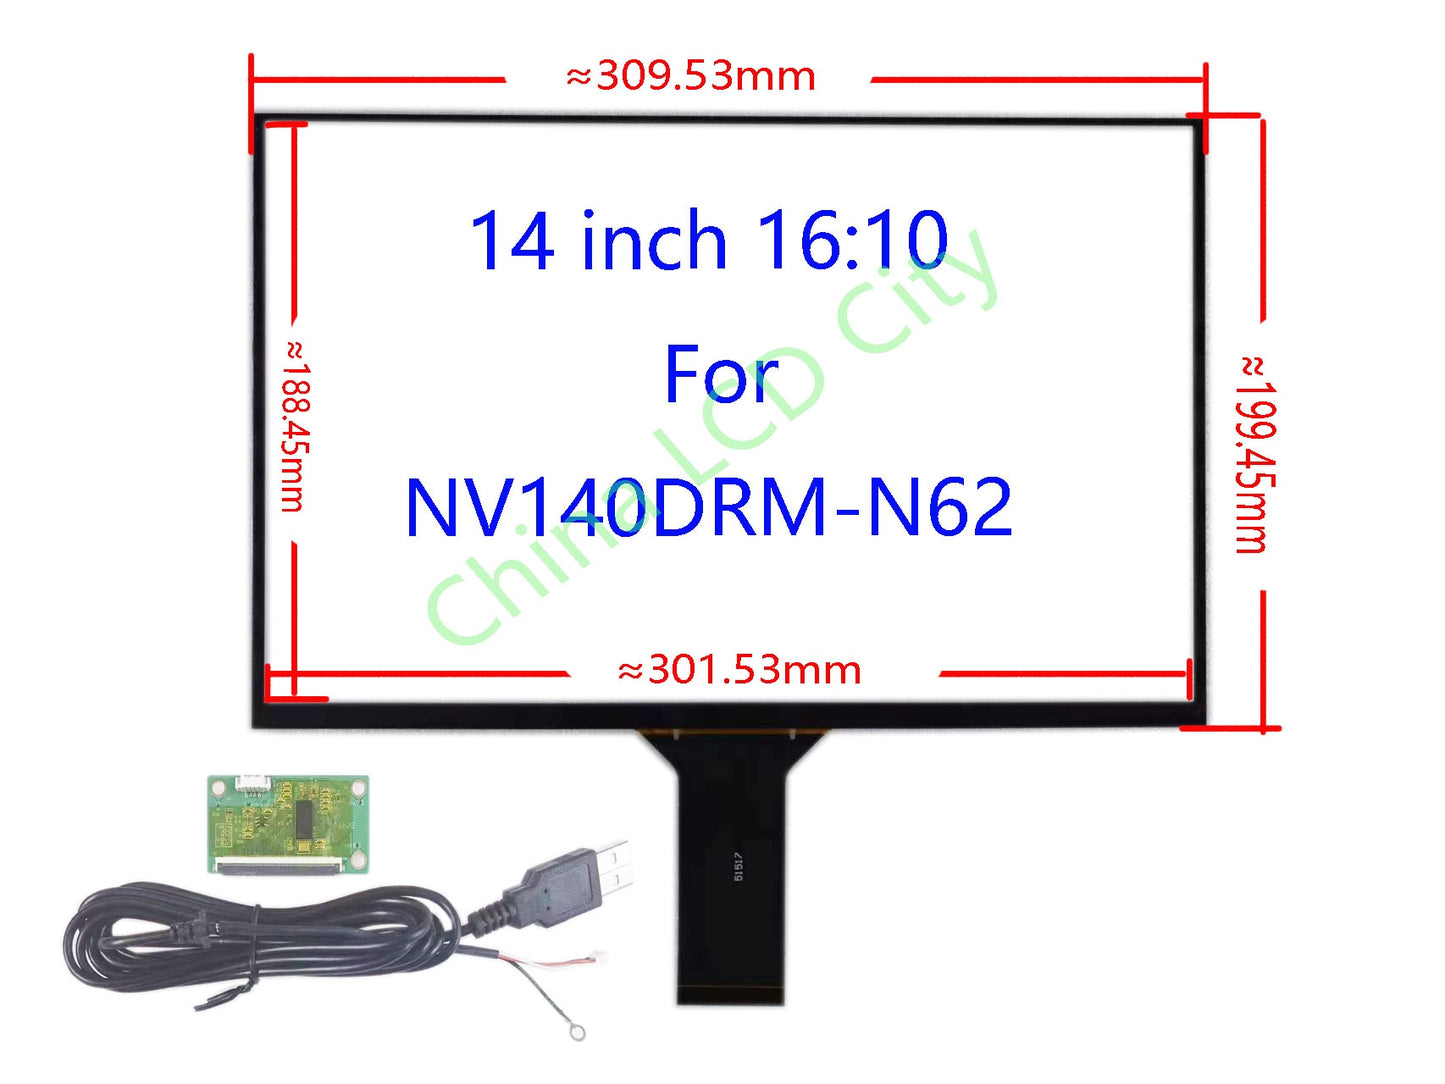 10.1/11.6/12.5/13.3/14/15.6/16 Inch USB Capacitive Touch Screen Sensor Digitizer Glass10Fingers Raspberry Pi Windows Hand Writer